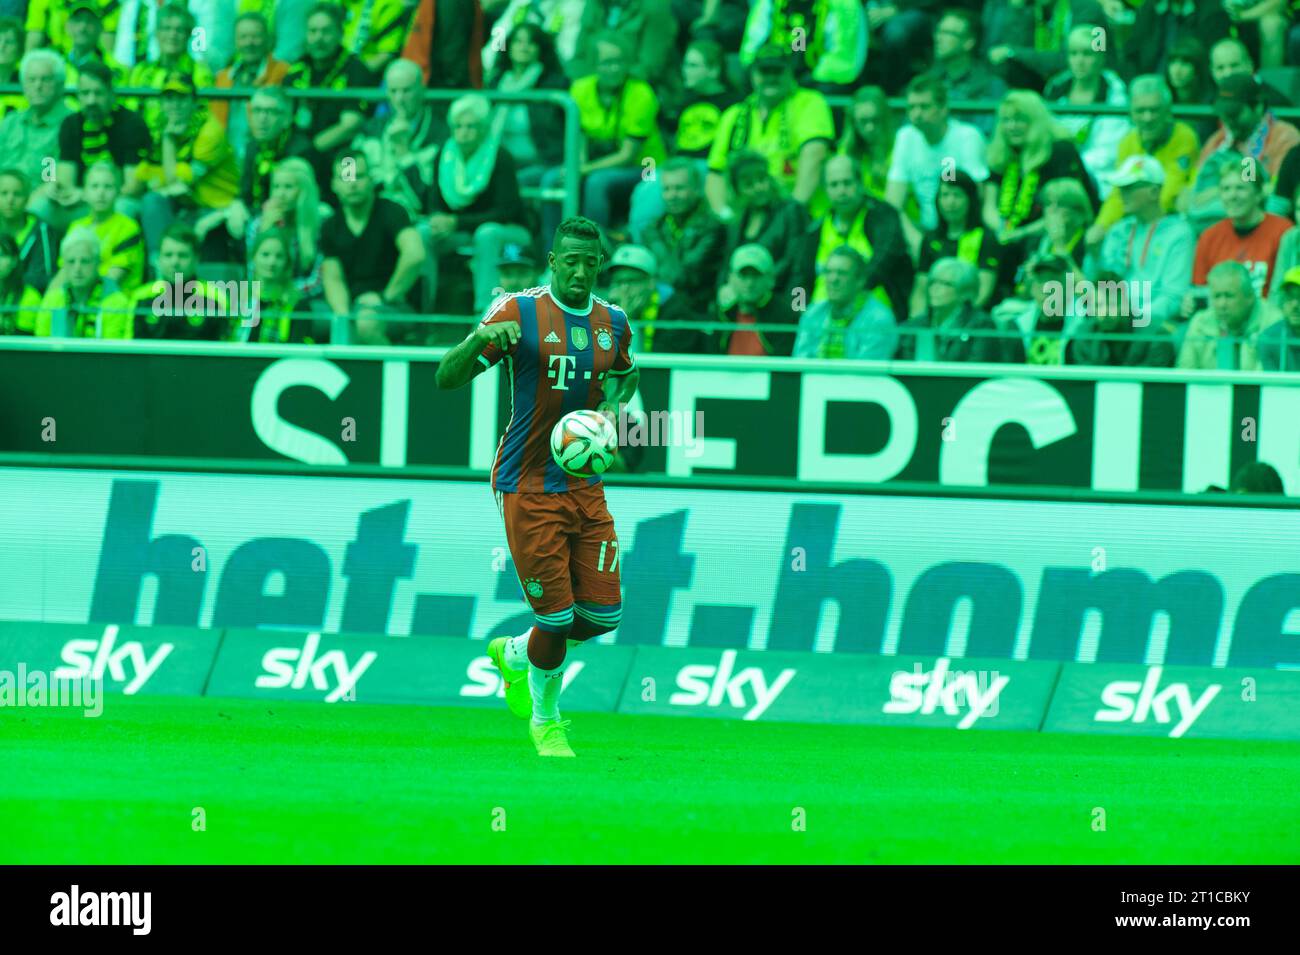 Jerome Boateng (17 - FC Bayern Muenchen) Fussball DFL Supercup in Dortmund, Deutschland am 13.08.2014 Stock Photo